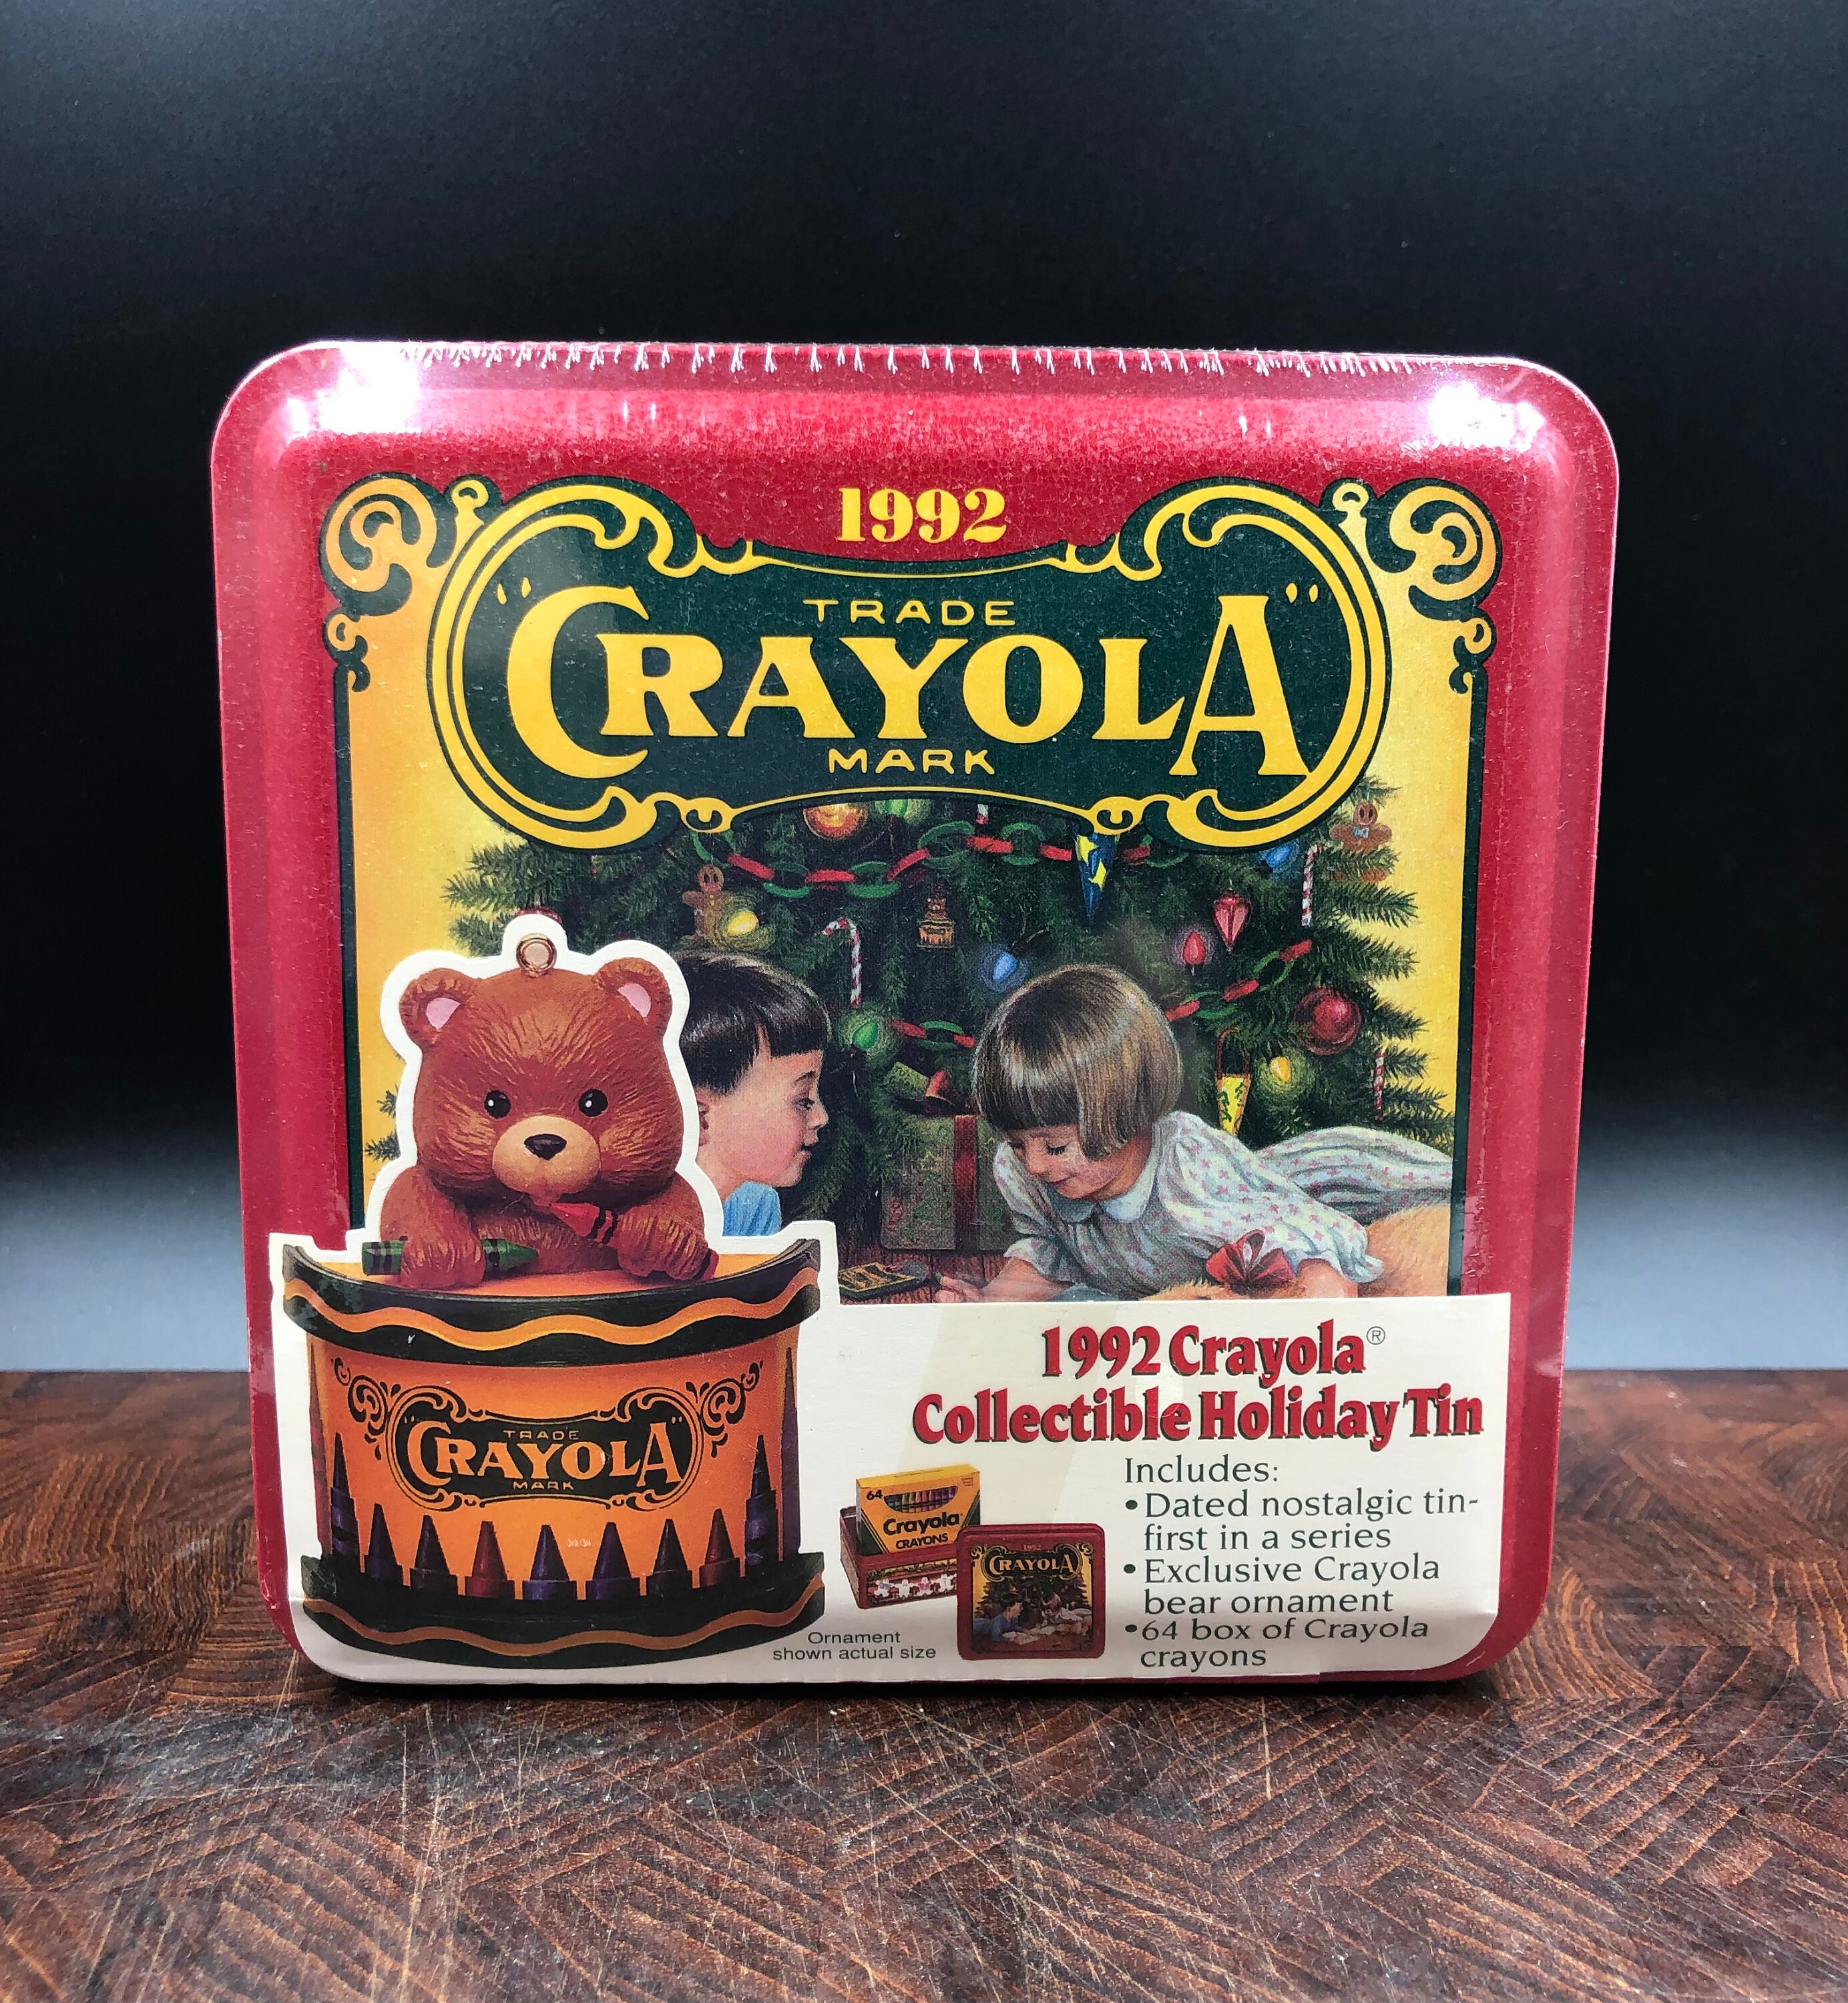 Collectible Crayola Holiday Tin Crayola Crayons 1992 Holiday Collector's Tin with 64 Box of Crayons & Bear Ornament